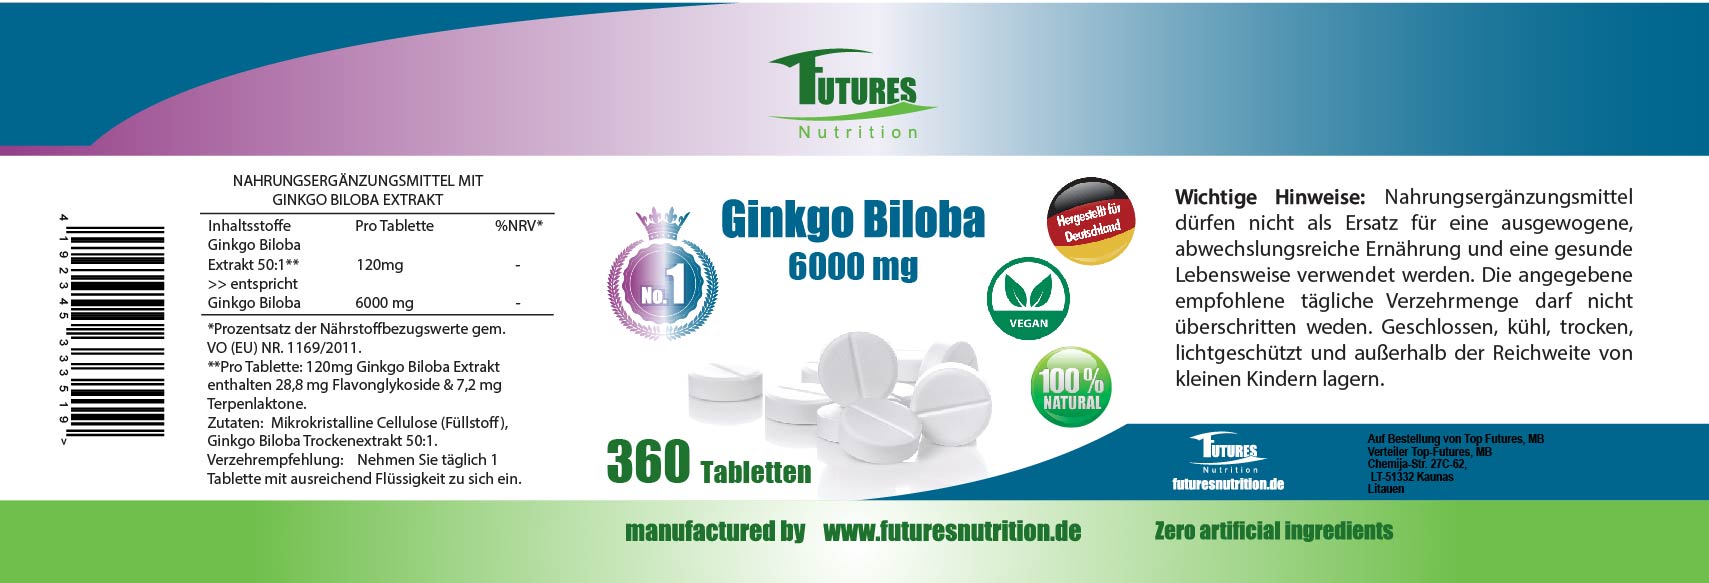 5 x Ginkgo Biloba 1800 tablet